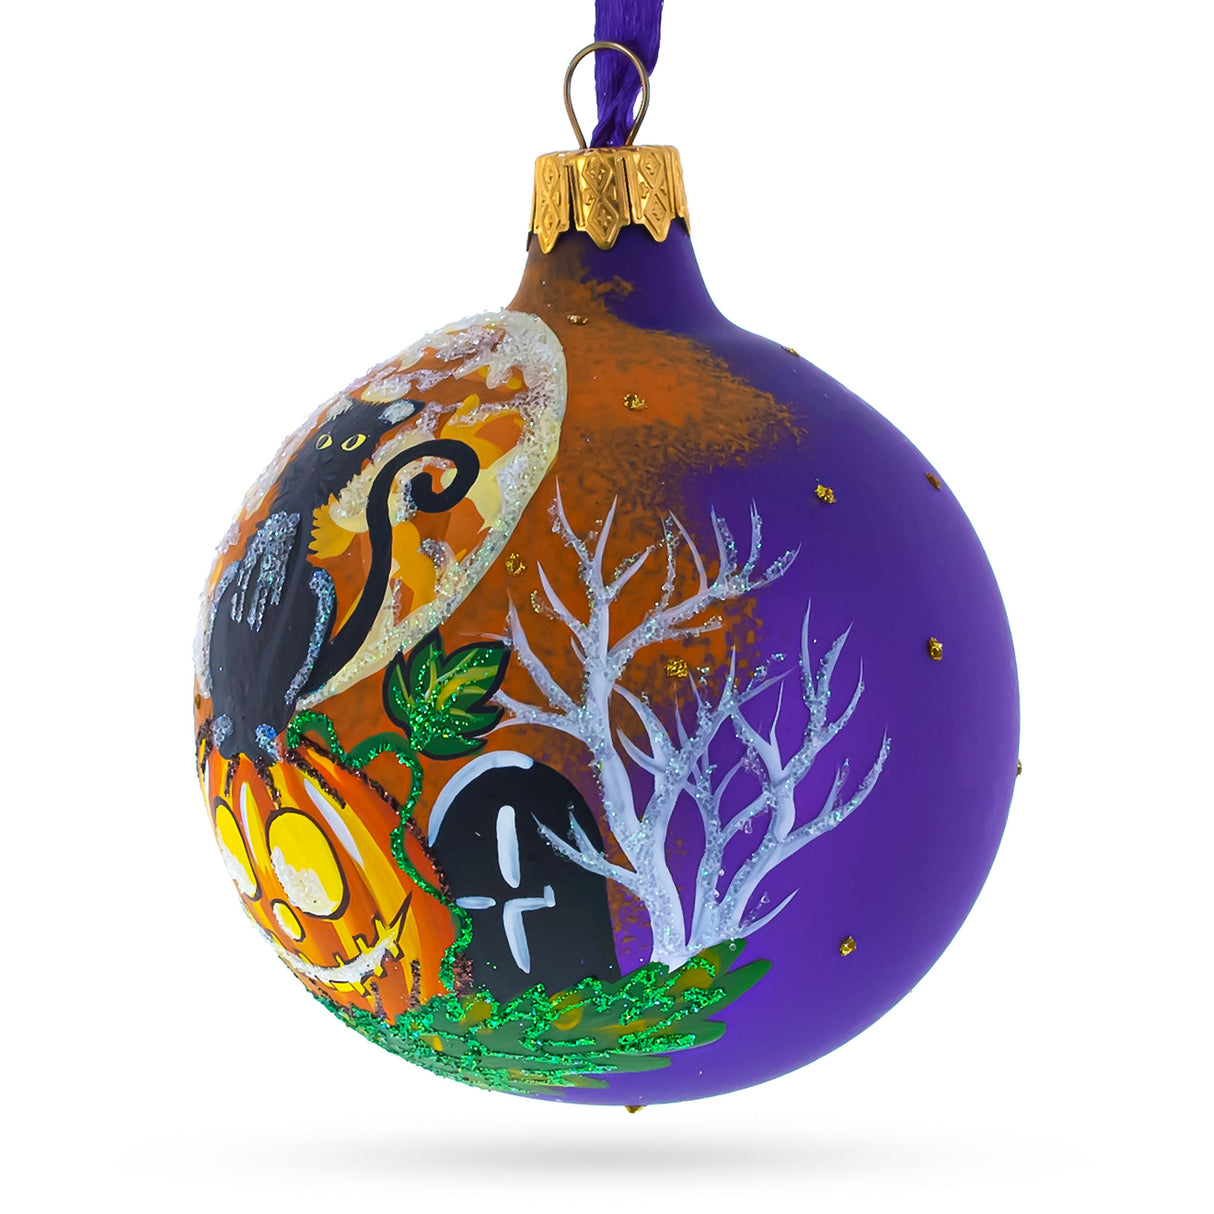 Buy Christmas Ornaments > Celebrations > Halloween by BestPysanky Online Gift Ship